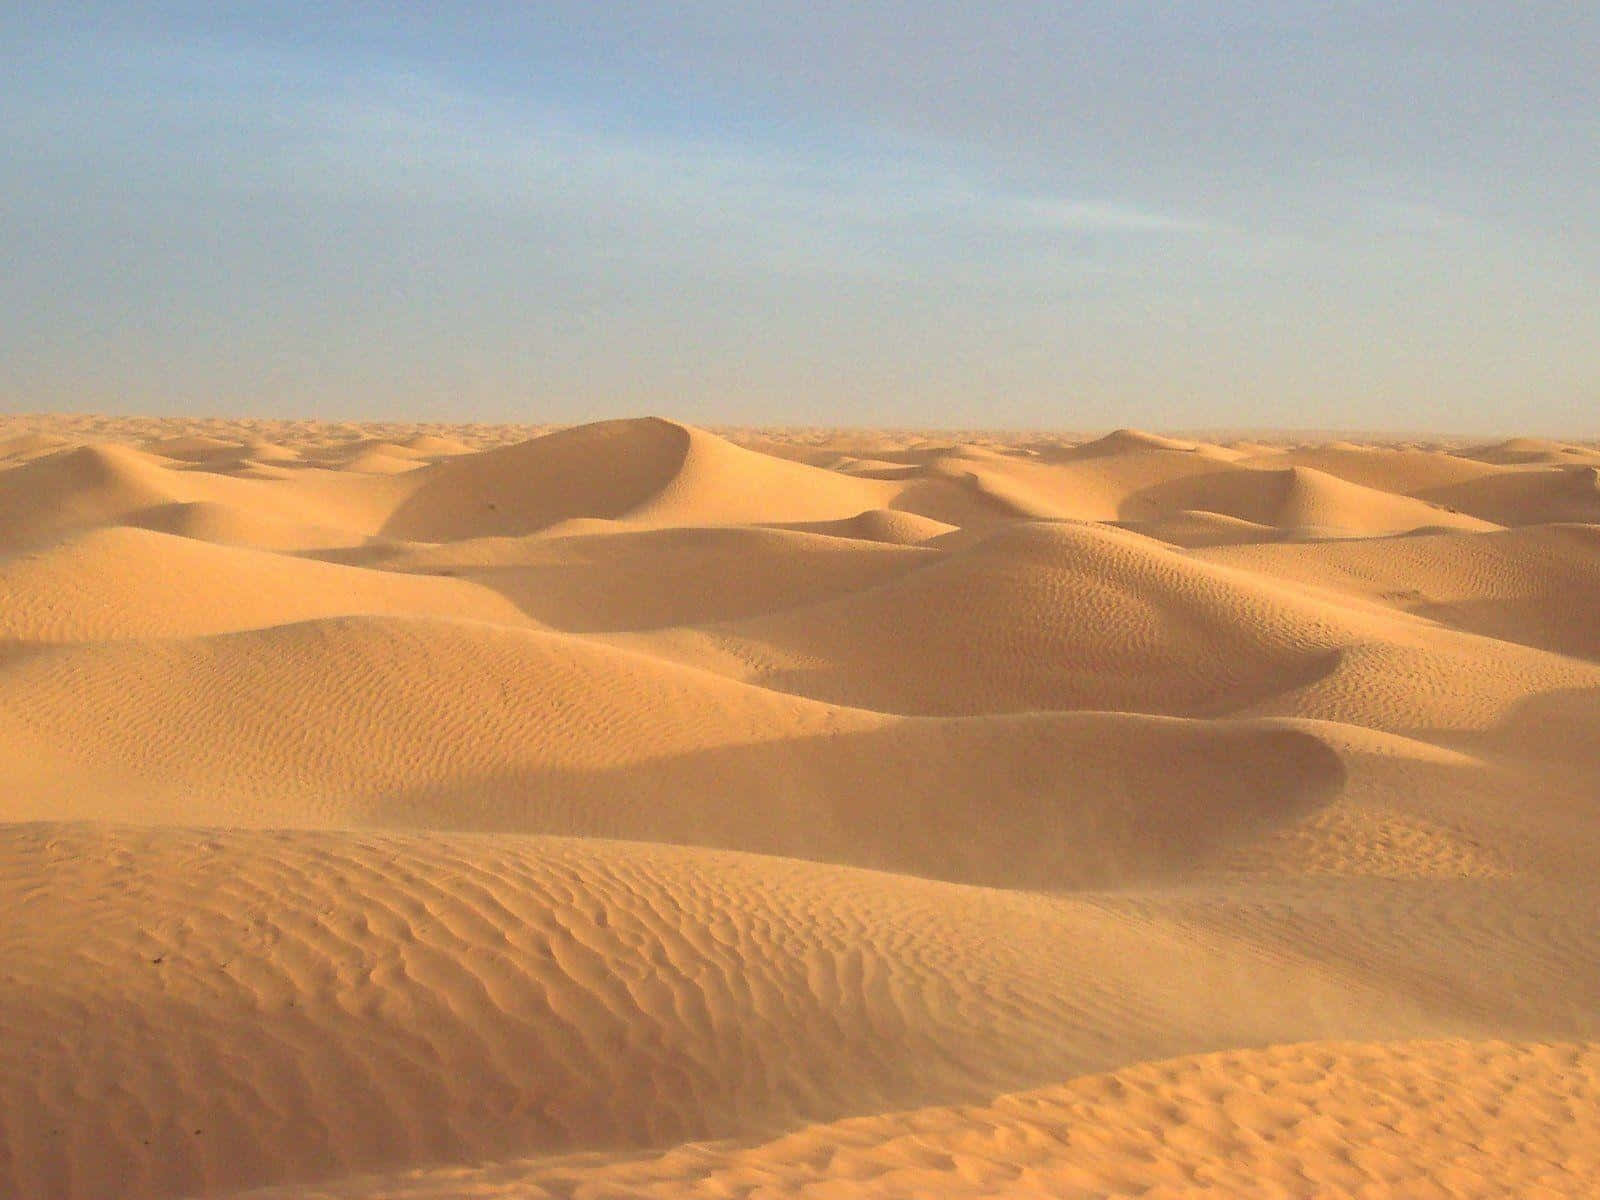 The Beauty of the Arrakis Desert